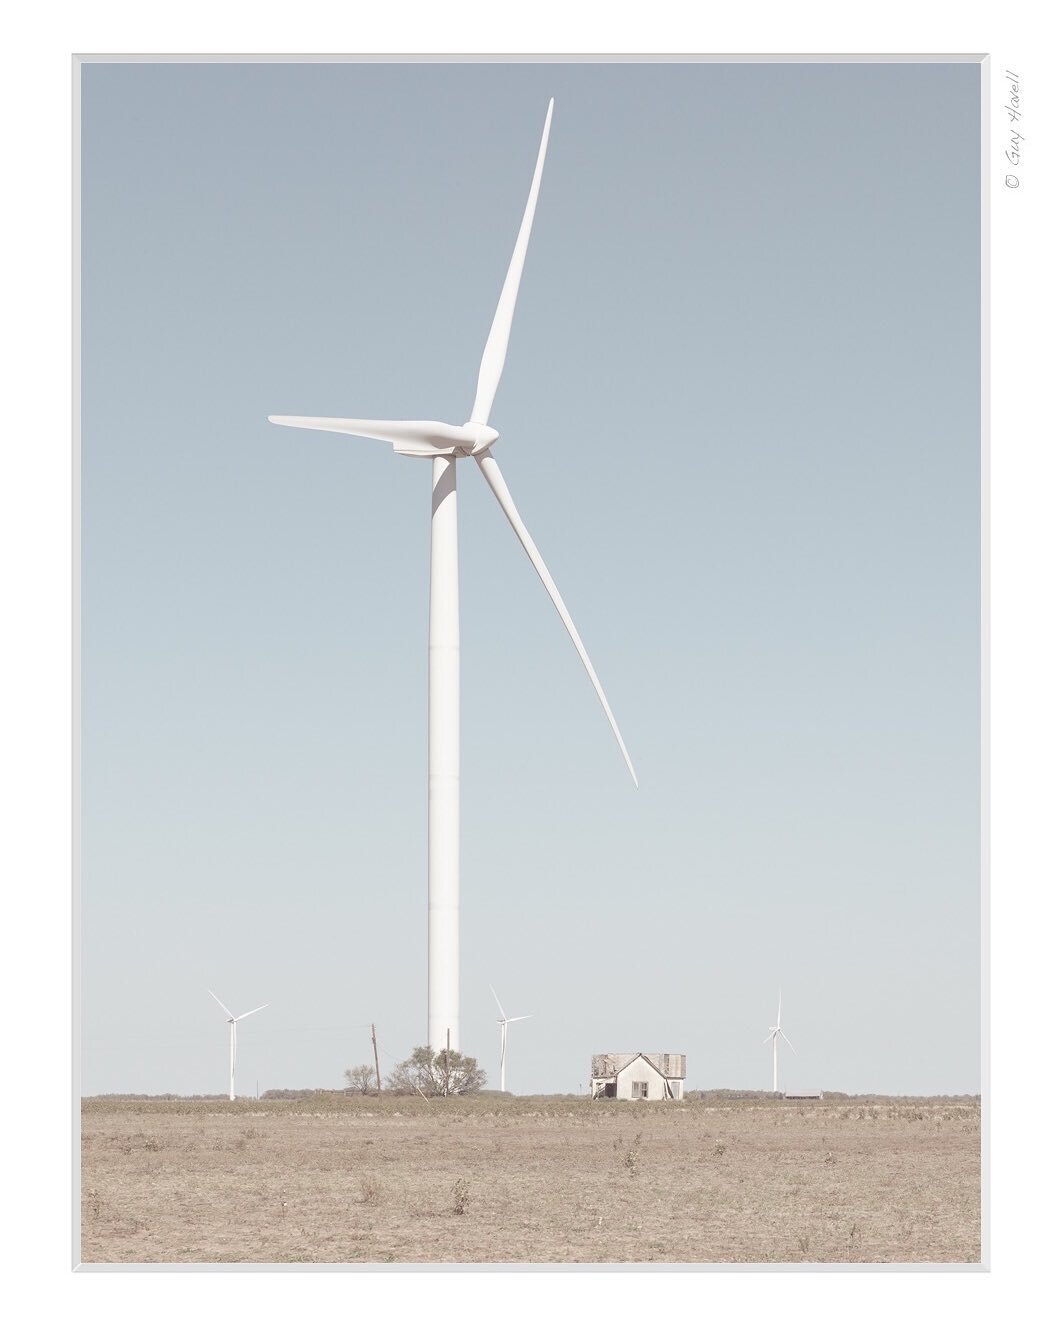 Dickens, Texas. USA (2018) &copy; Guy Havell. &ldquo;Back Roads of Americana&rdquo; Project.

#newtopographics #texas #windmill #landscapephotography #builtenvironment #renewableenergy #windpower #house #mediumformat #alpacameras #guyhavell #america 